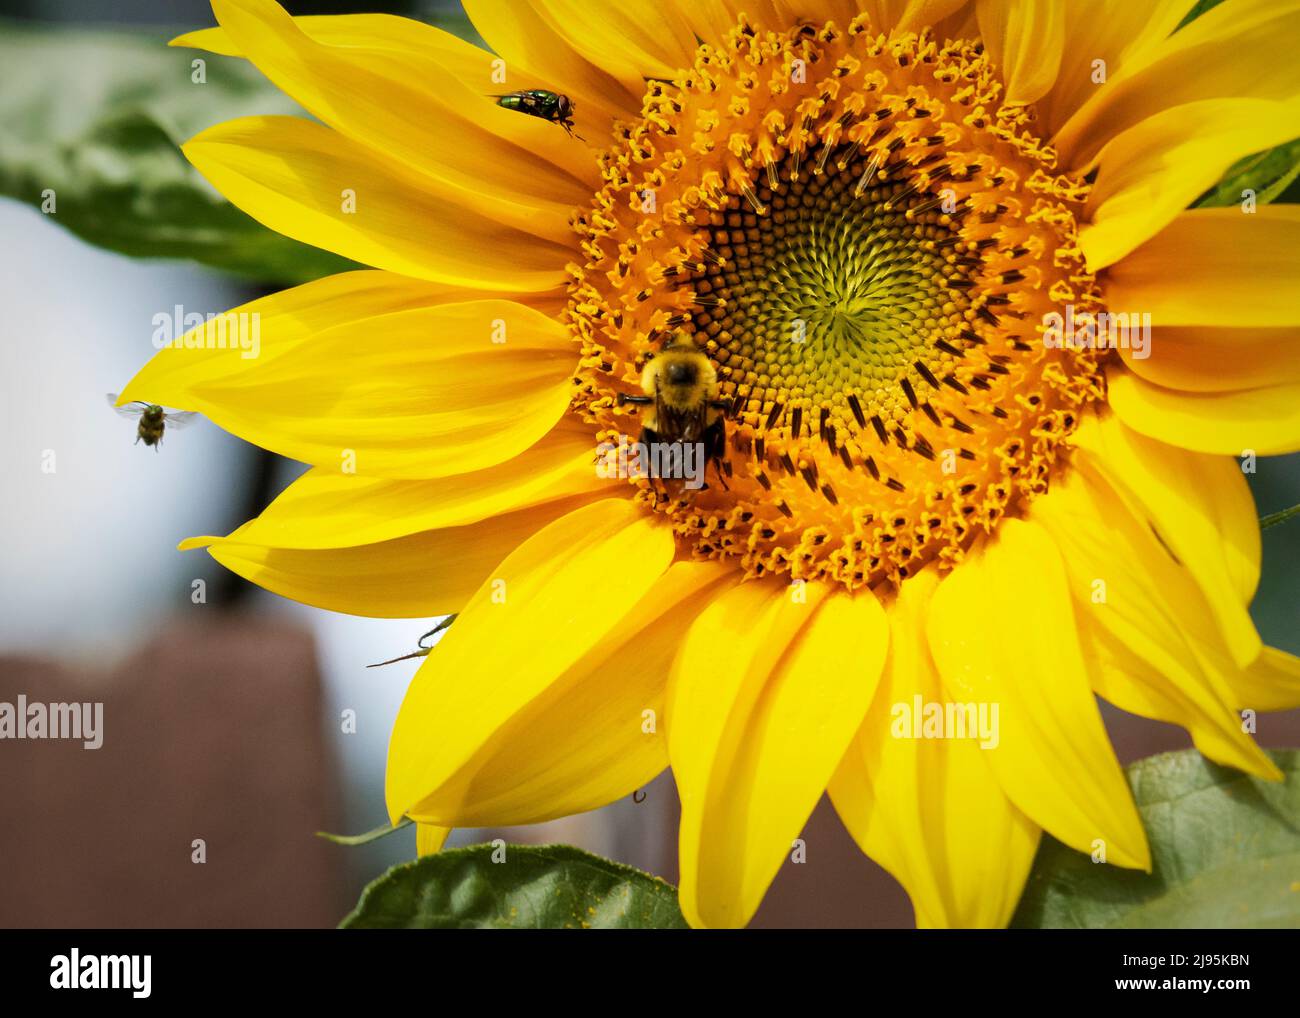 A bumble bee polinates a sunflower in a patio garden. Stock Photo